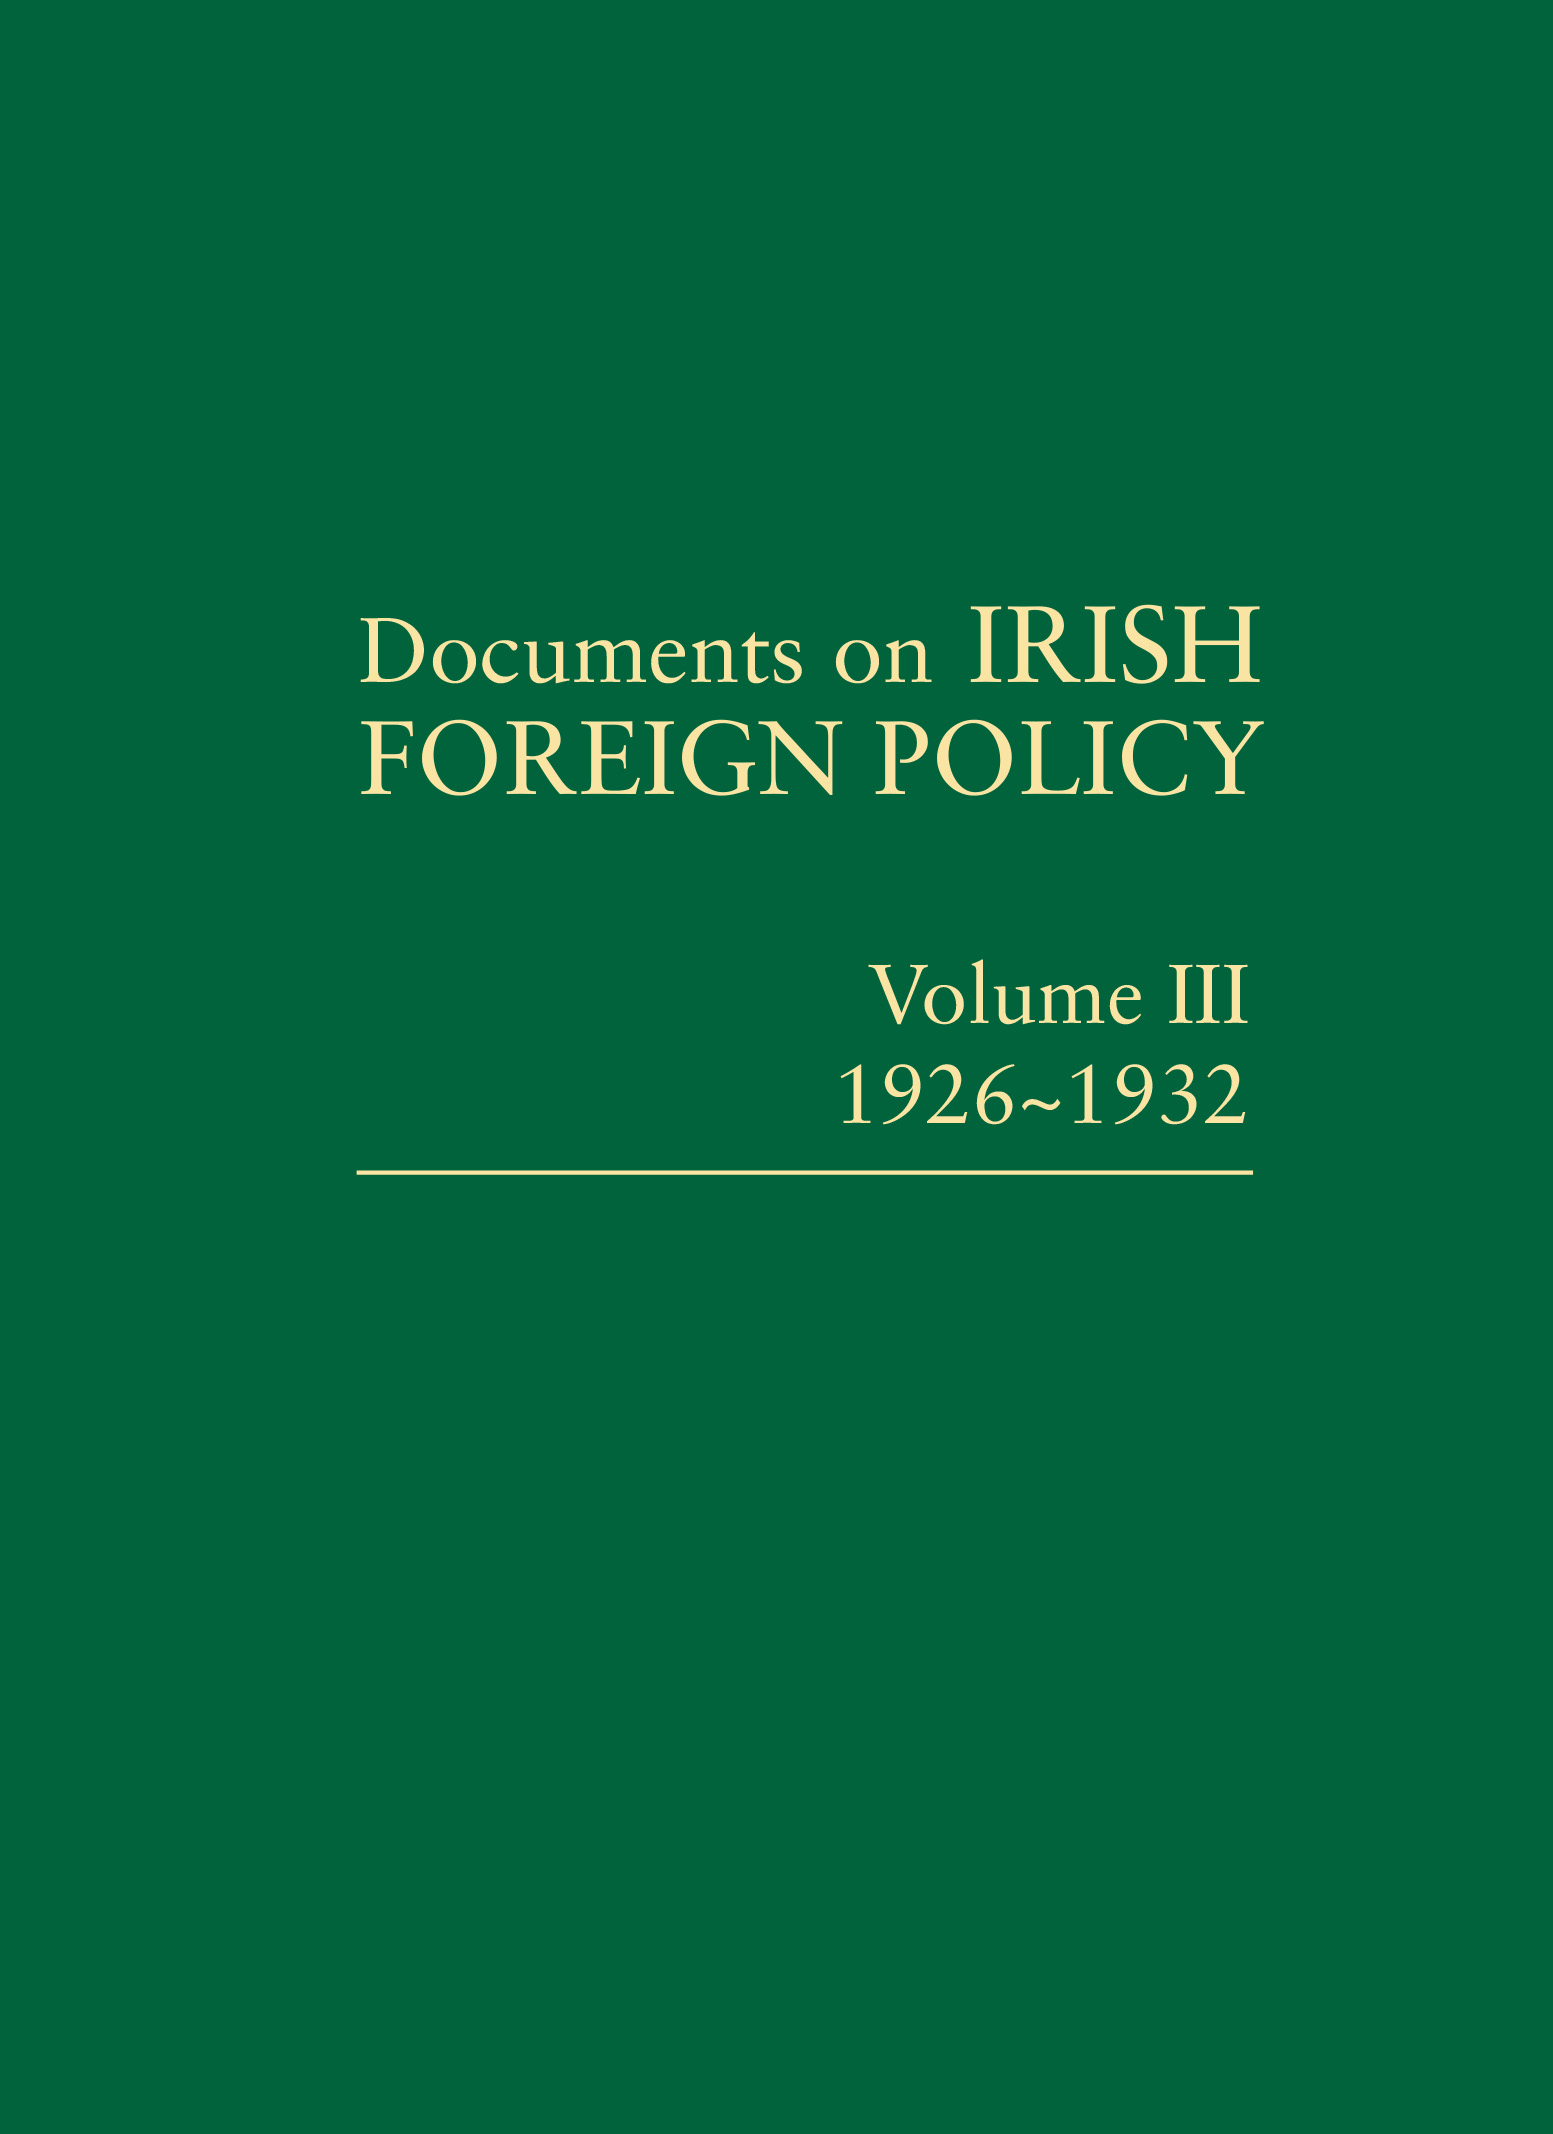 Documents on Irish Foreign Policy, Volume III, 1926-1932